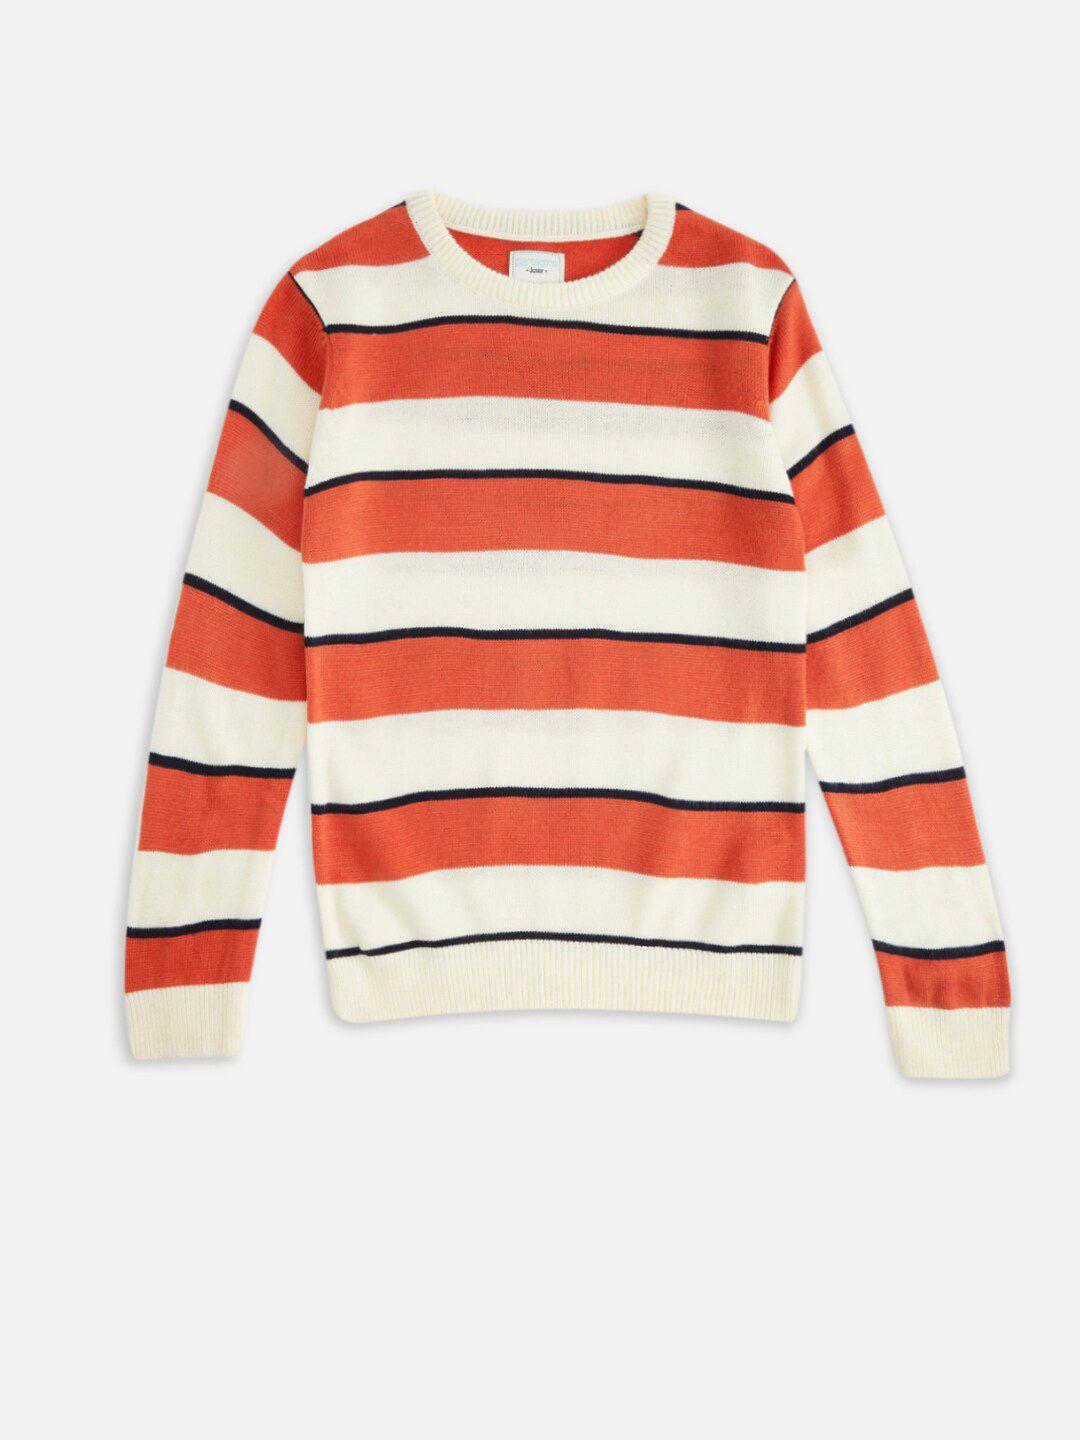 pantaloons junior boys coral & orange striped cotton pullover